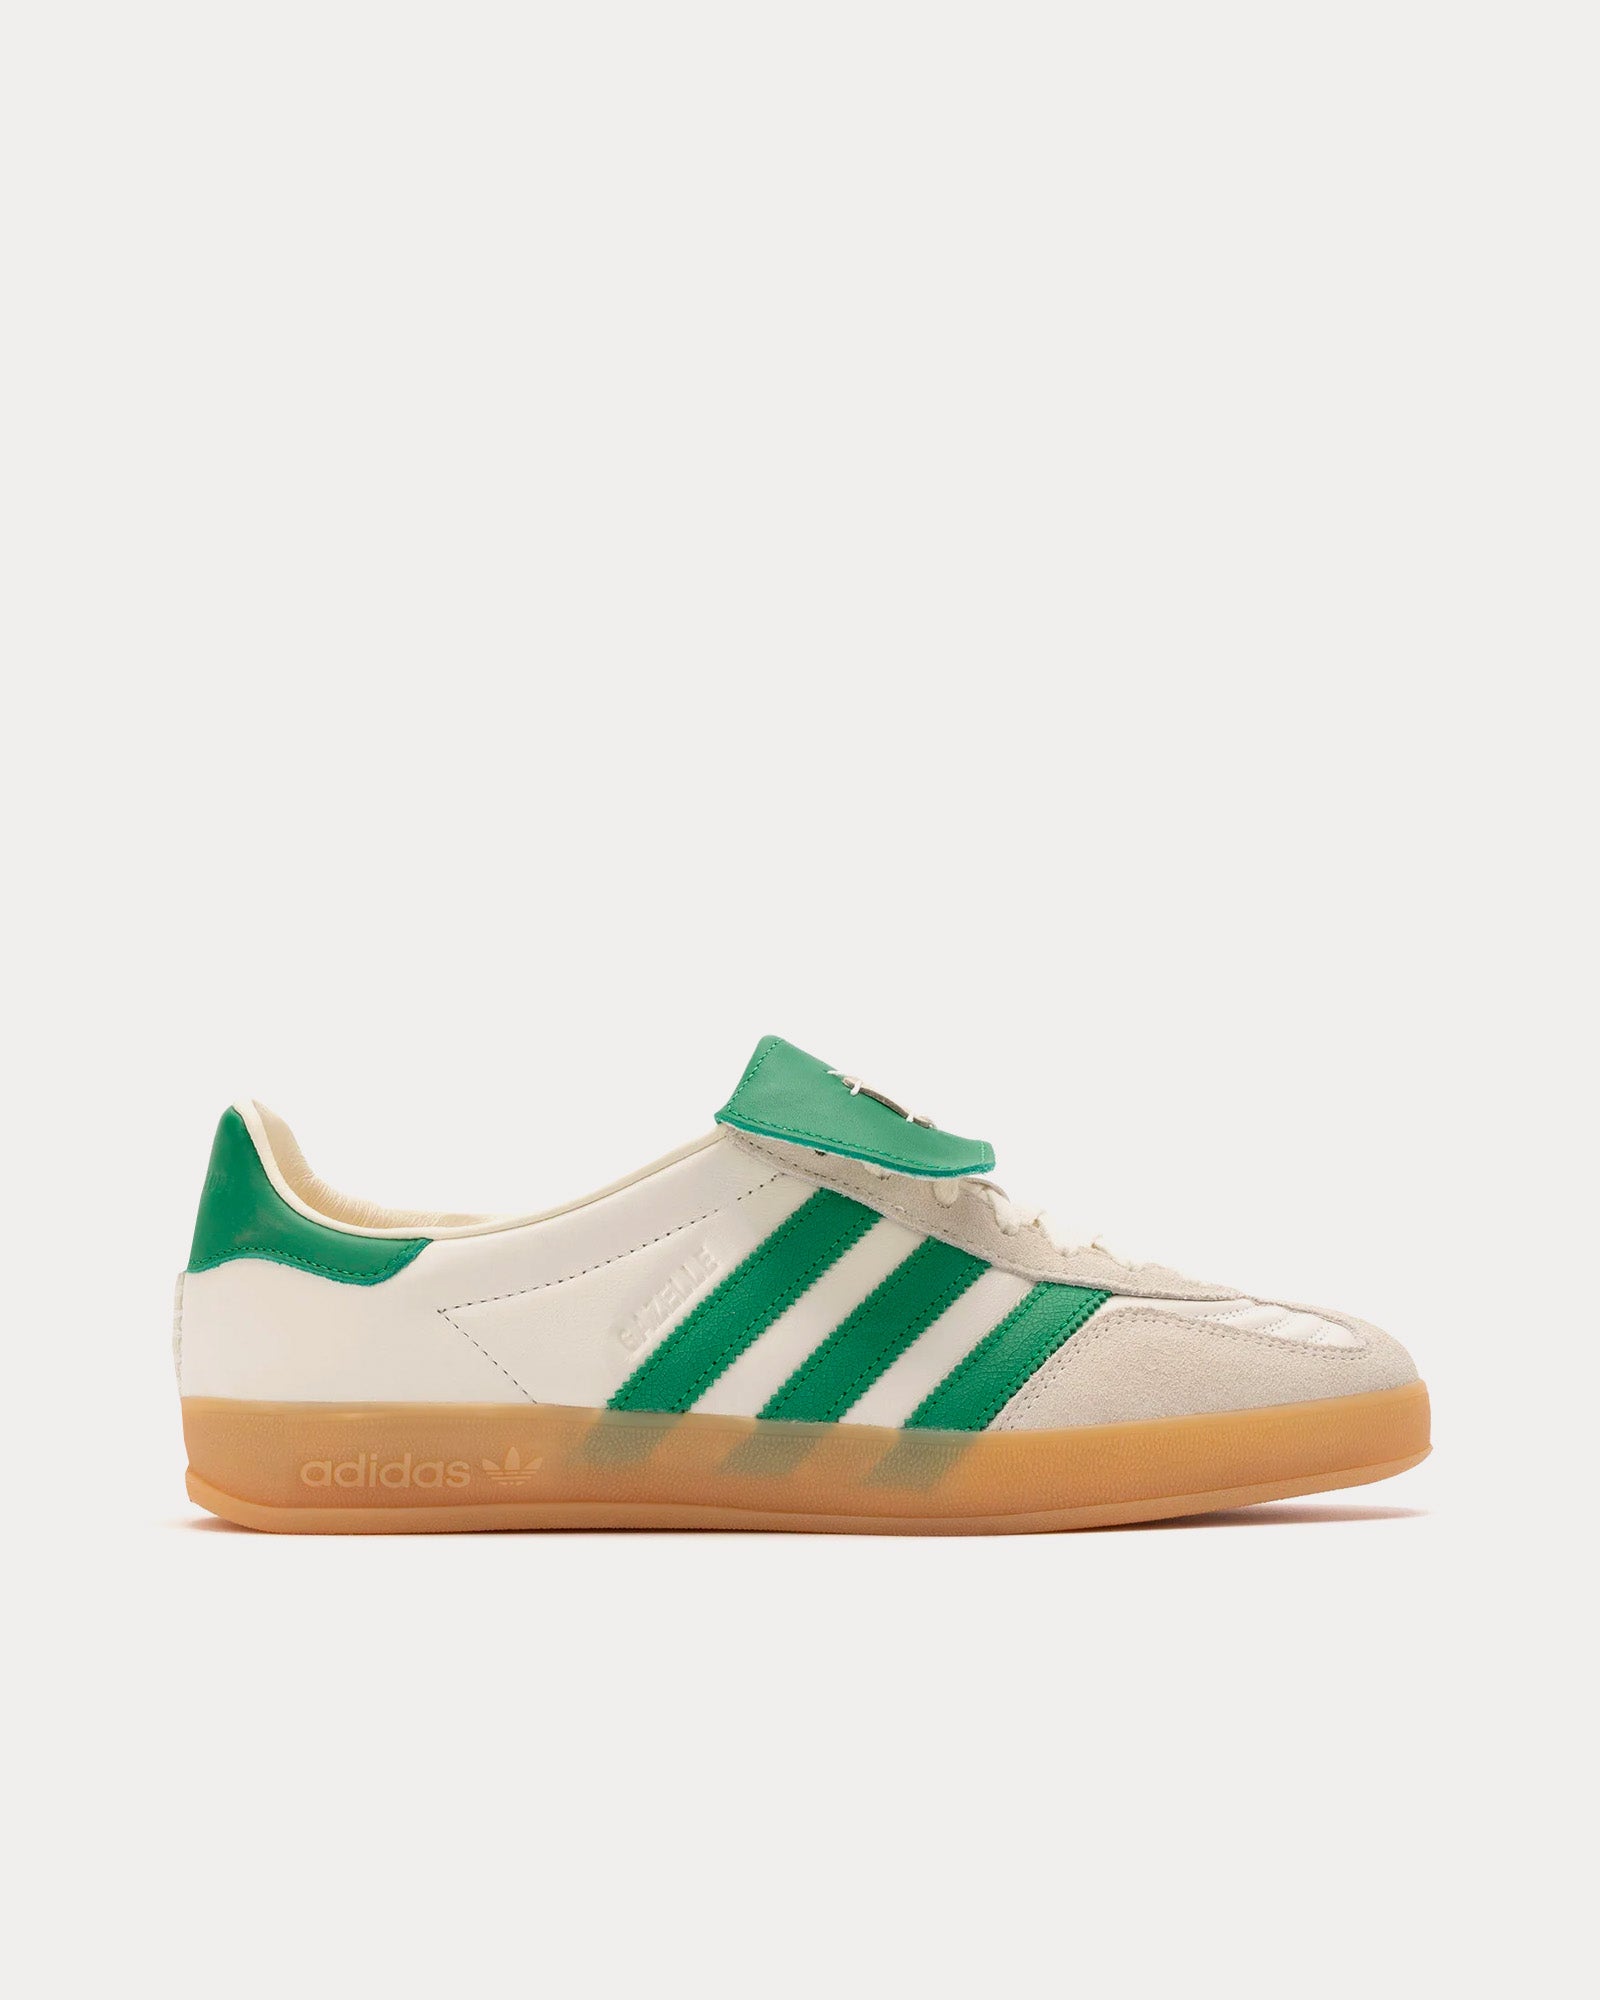 Adidas x Foot Industry - Gazelle Indoor Green / Cream White Low Top Sneakers